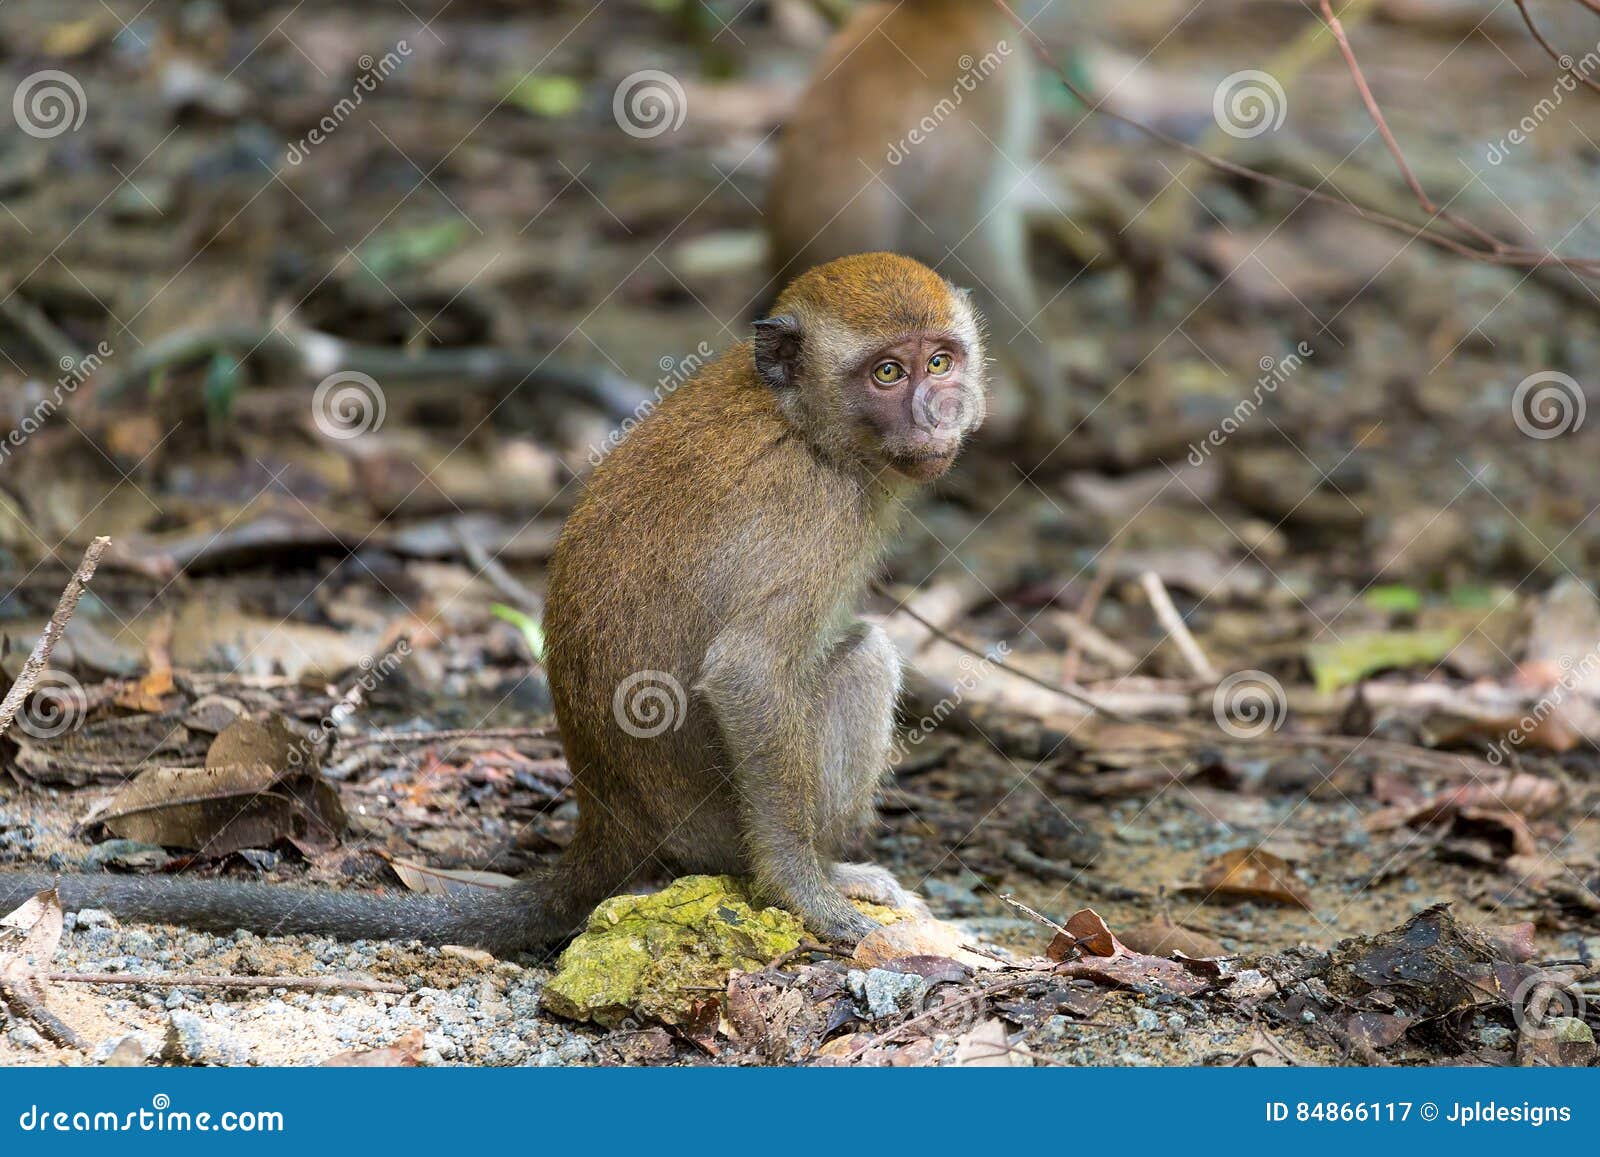 baby monkey in pulau ubin island